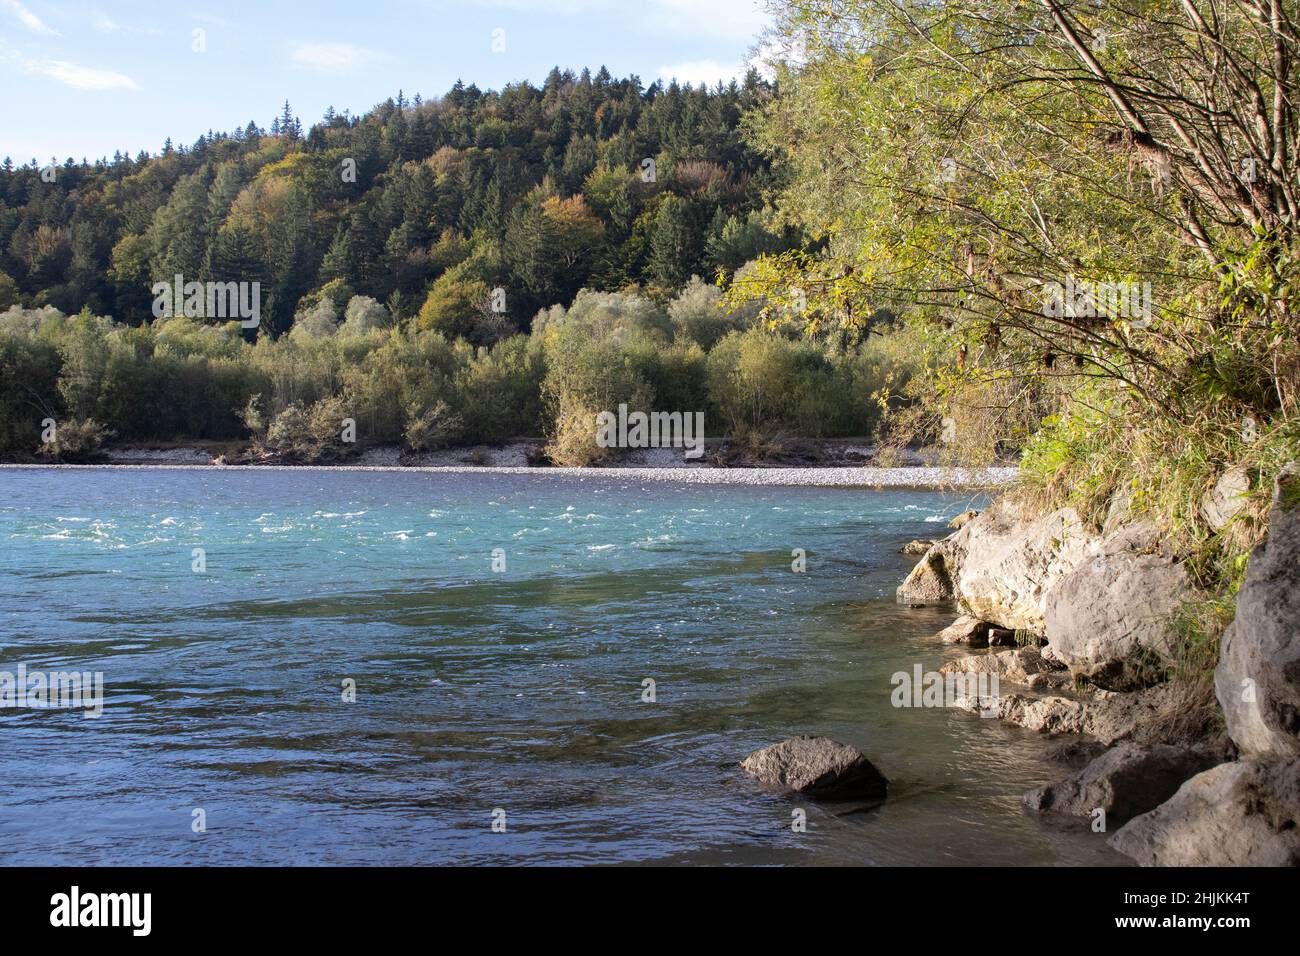 Blick vom Ufer des Lechs auf den Fluss Lech, der blau-grün leuchtet Banque D'Images